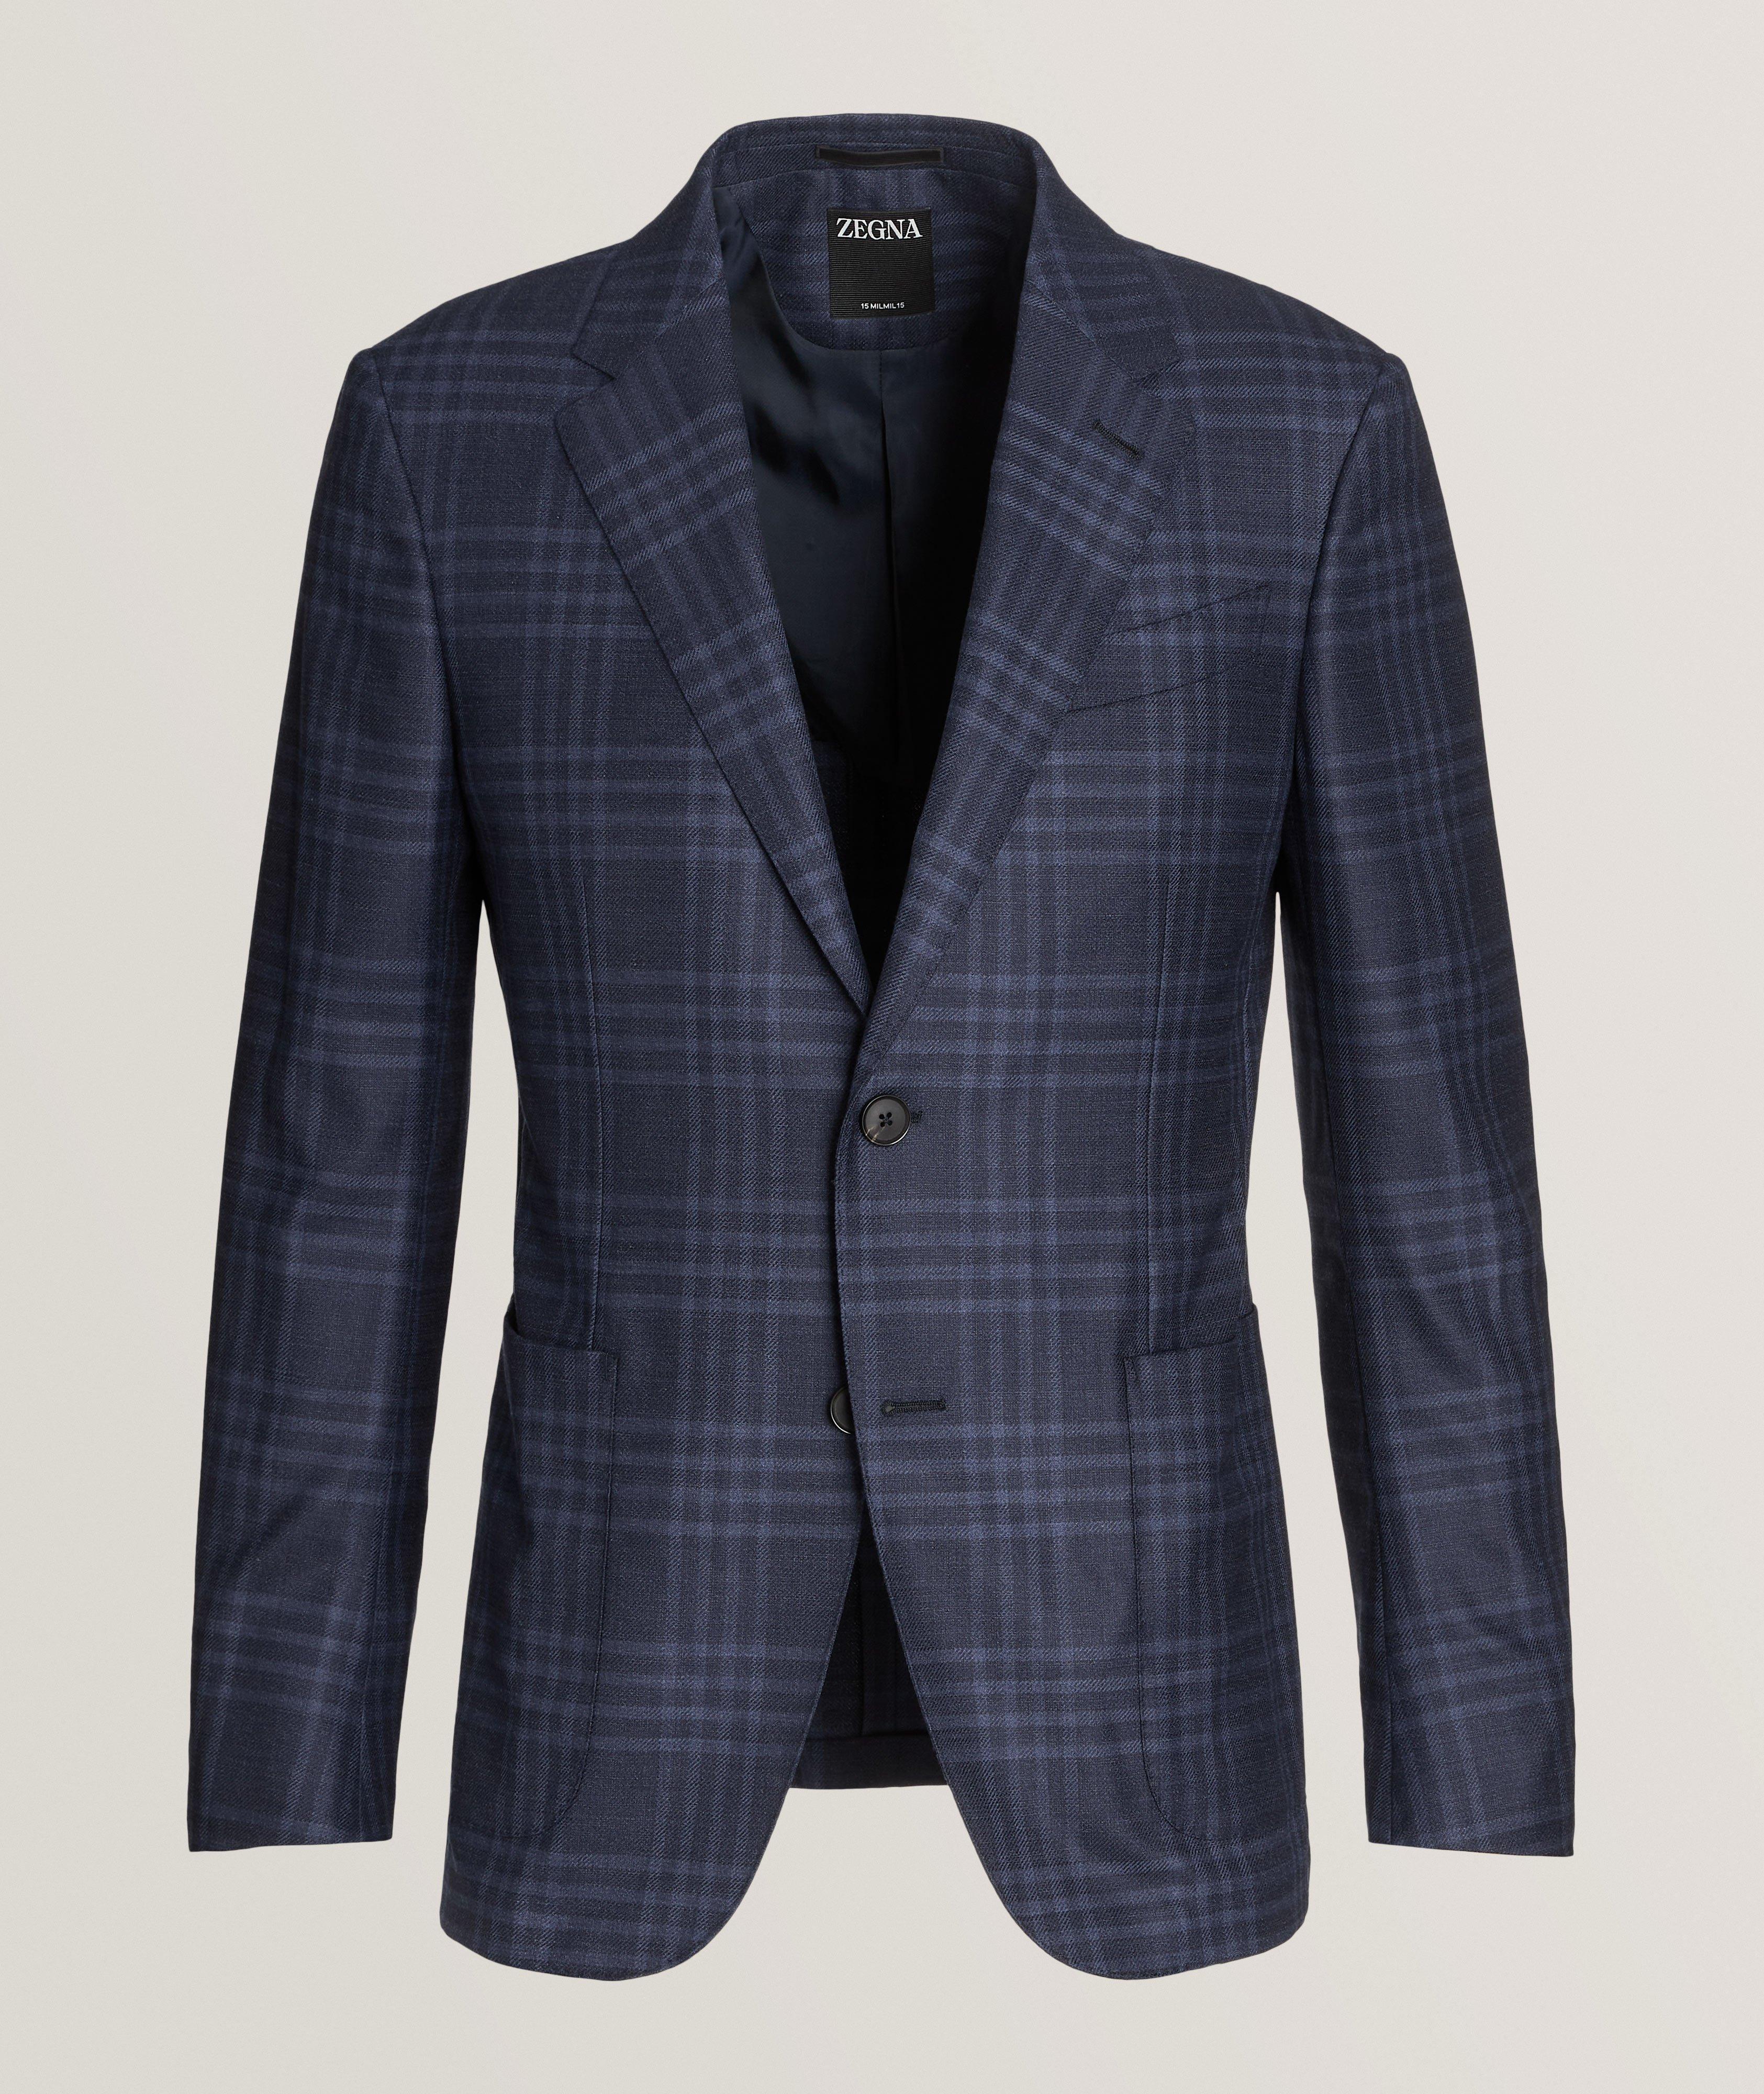 Checkered 15MilMil15 Wool Sport Jacket image 0